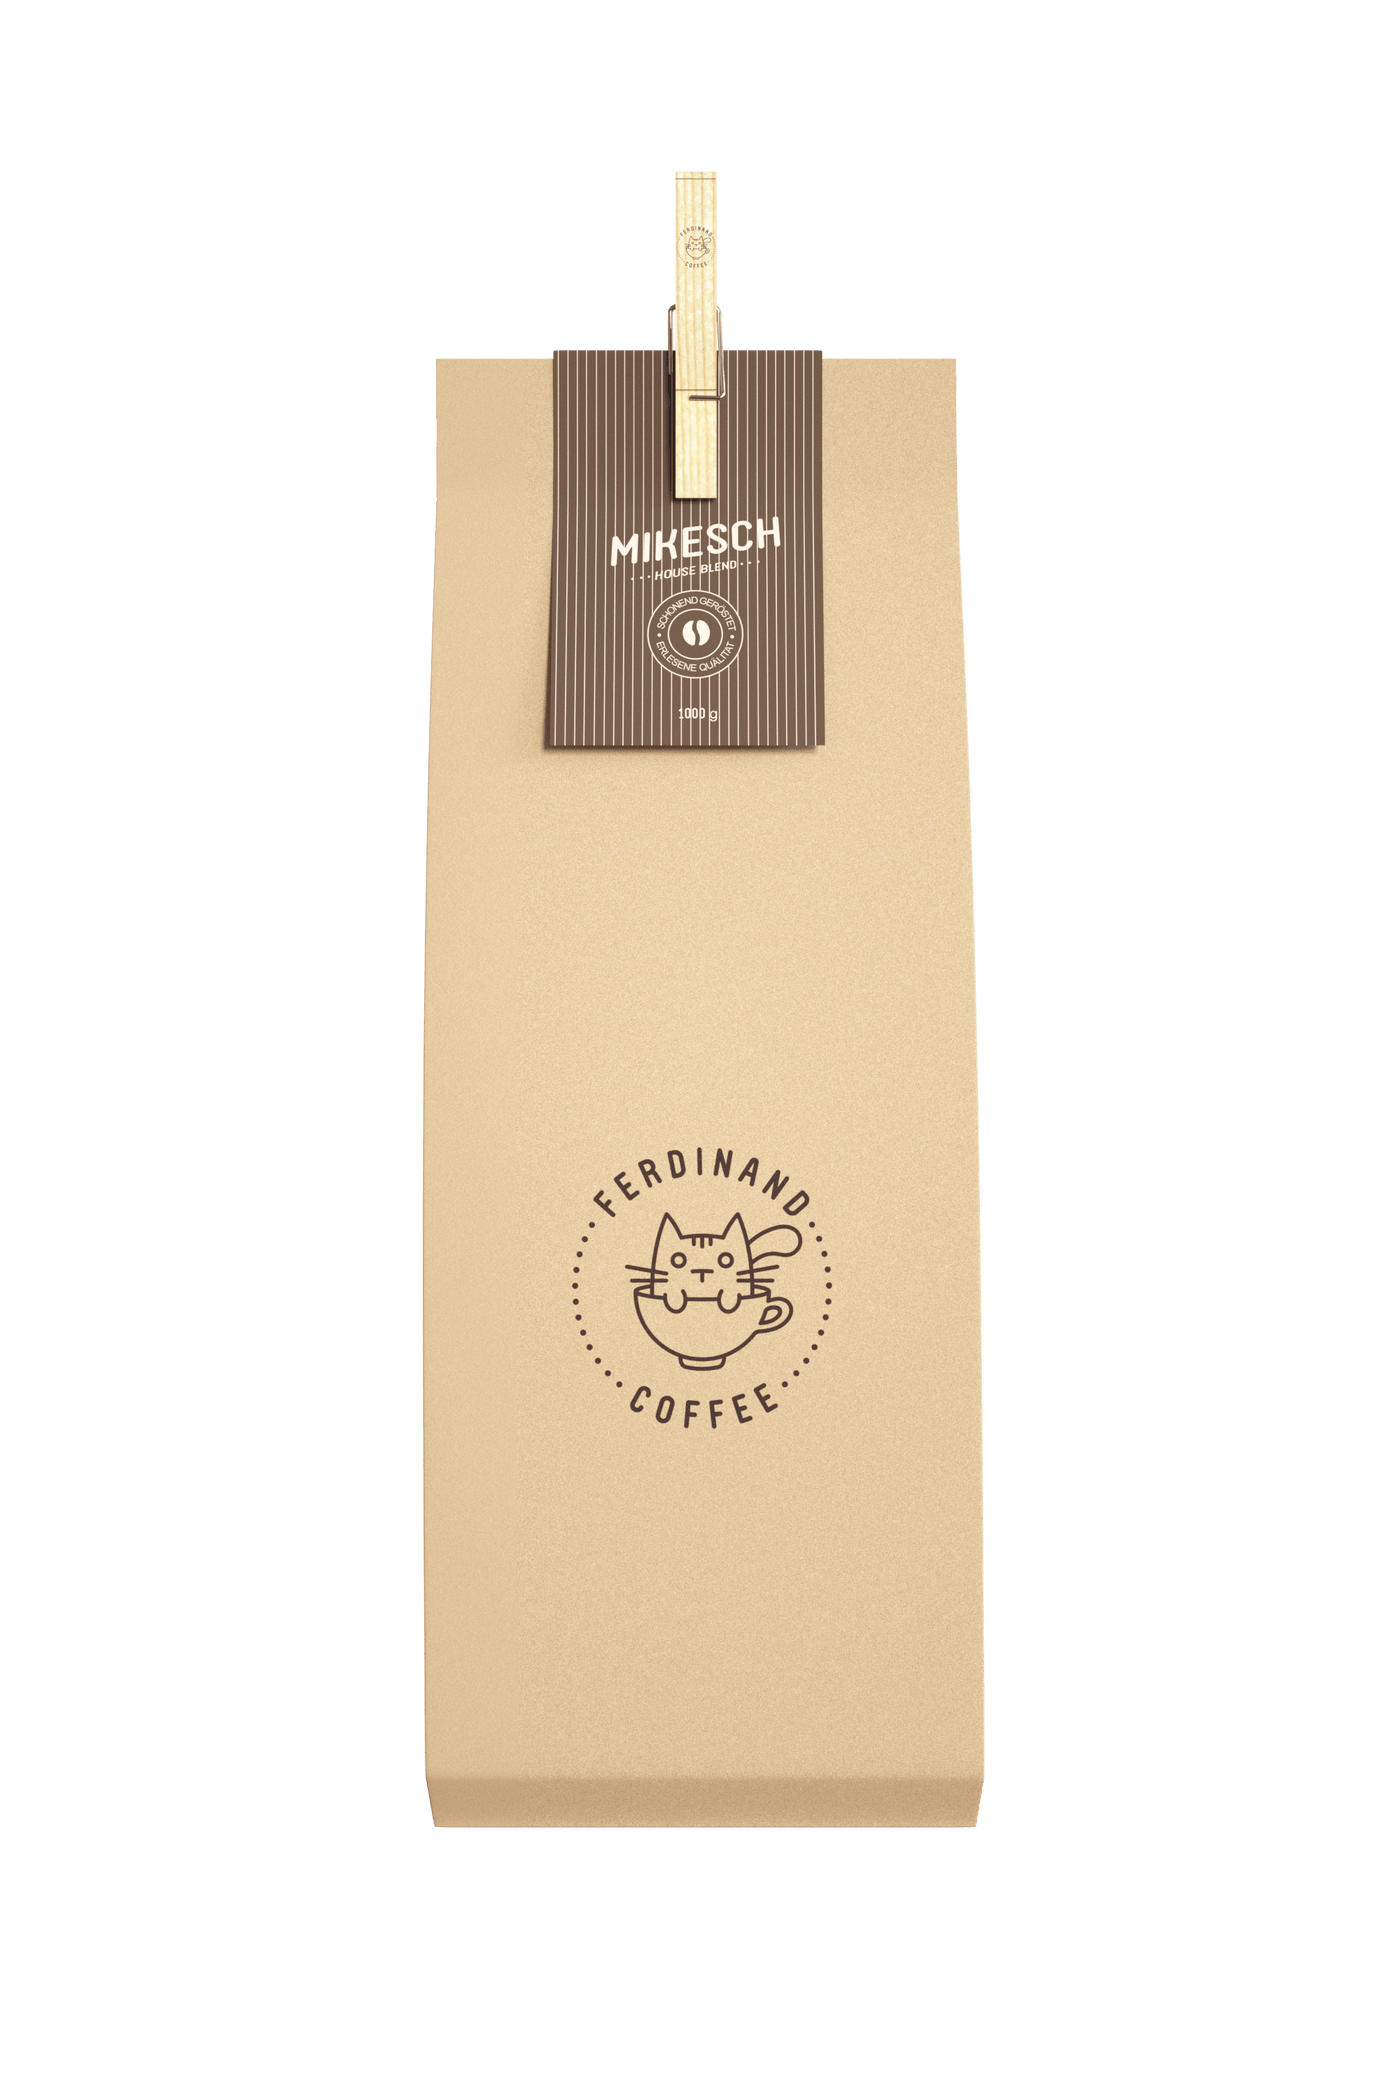 Mikesch House Blend / Kaffeebohnen Kaffee Ferdinand-Coffee <br>Umweltfreundlich verpackt, Solides Handwerk 